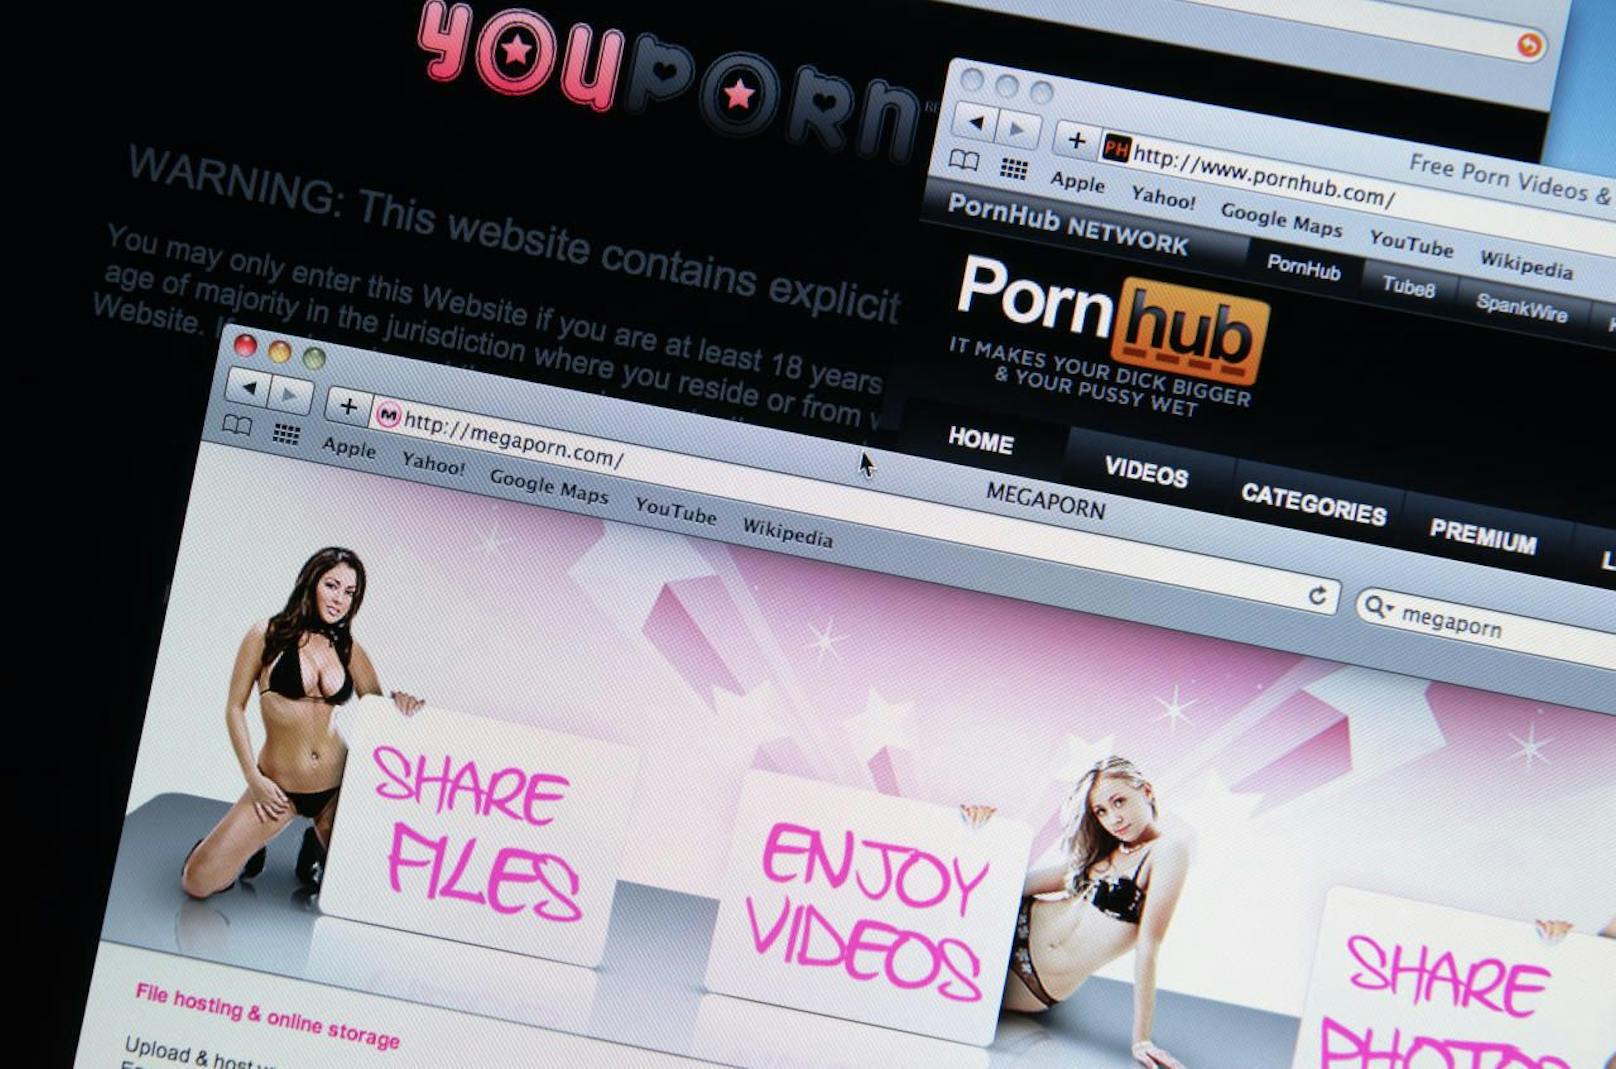 Youporn.com, PornHub.com und Megaporn.com: zahlreiche Mahnschreiben kursieren.